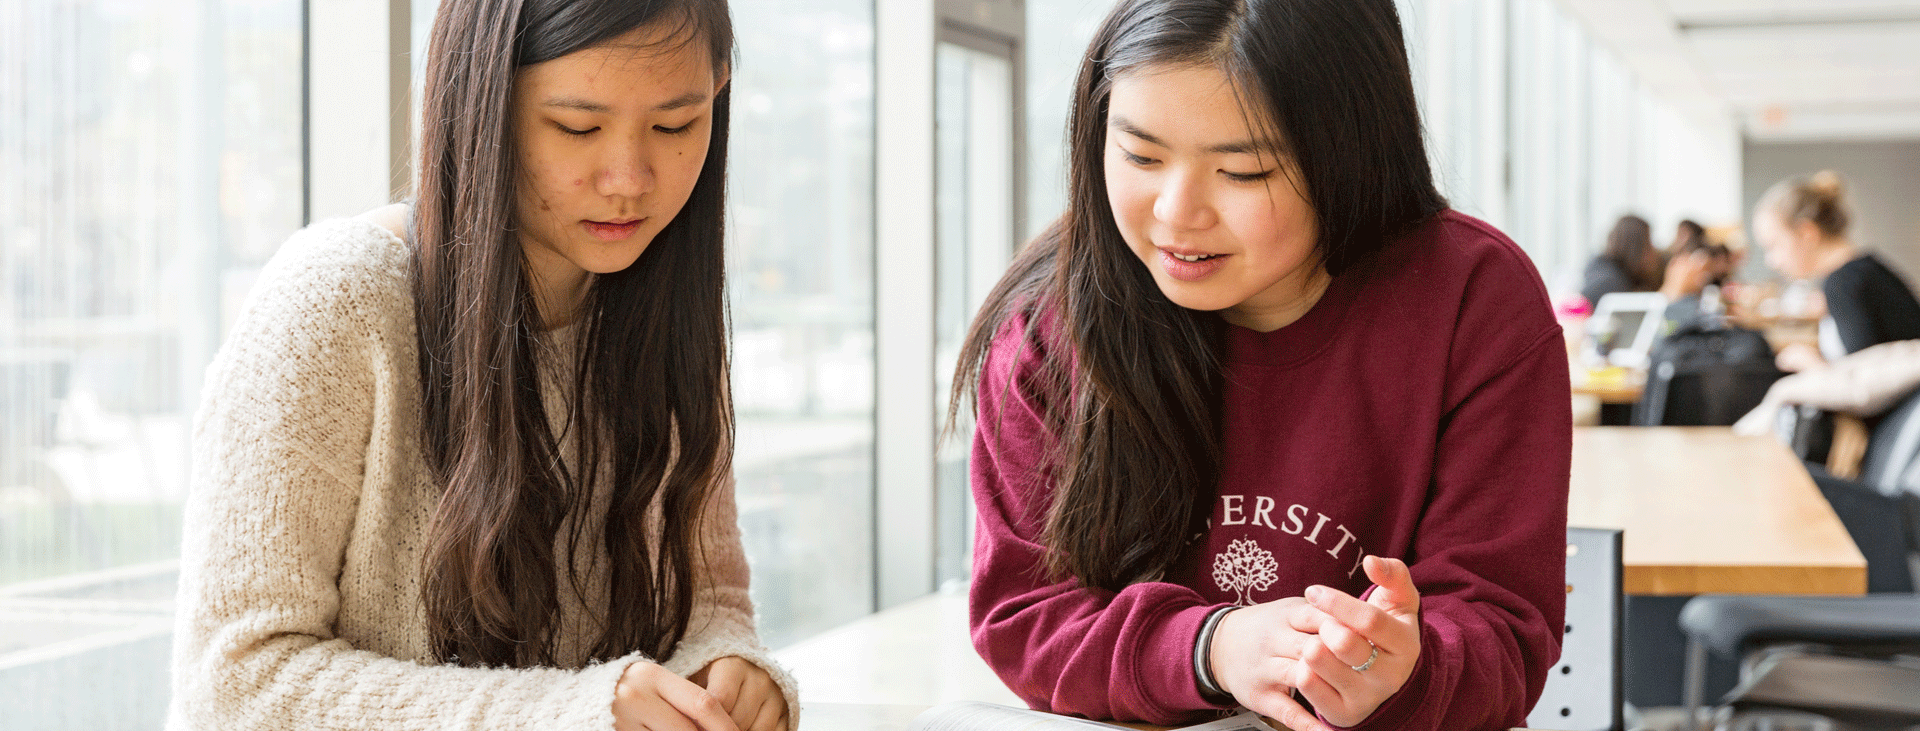 Two female students doing homework